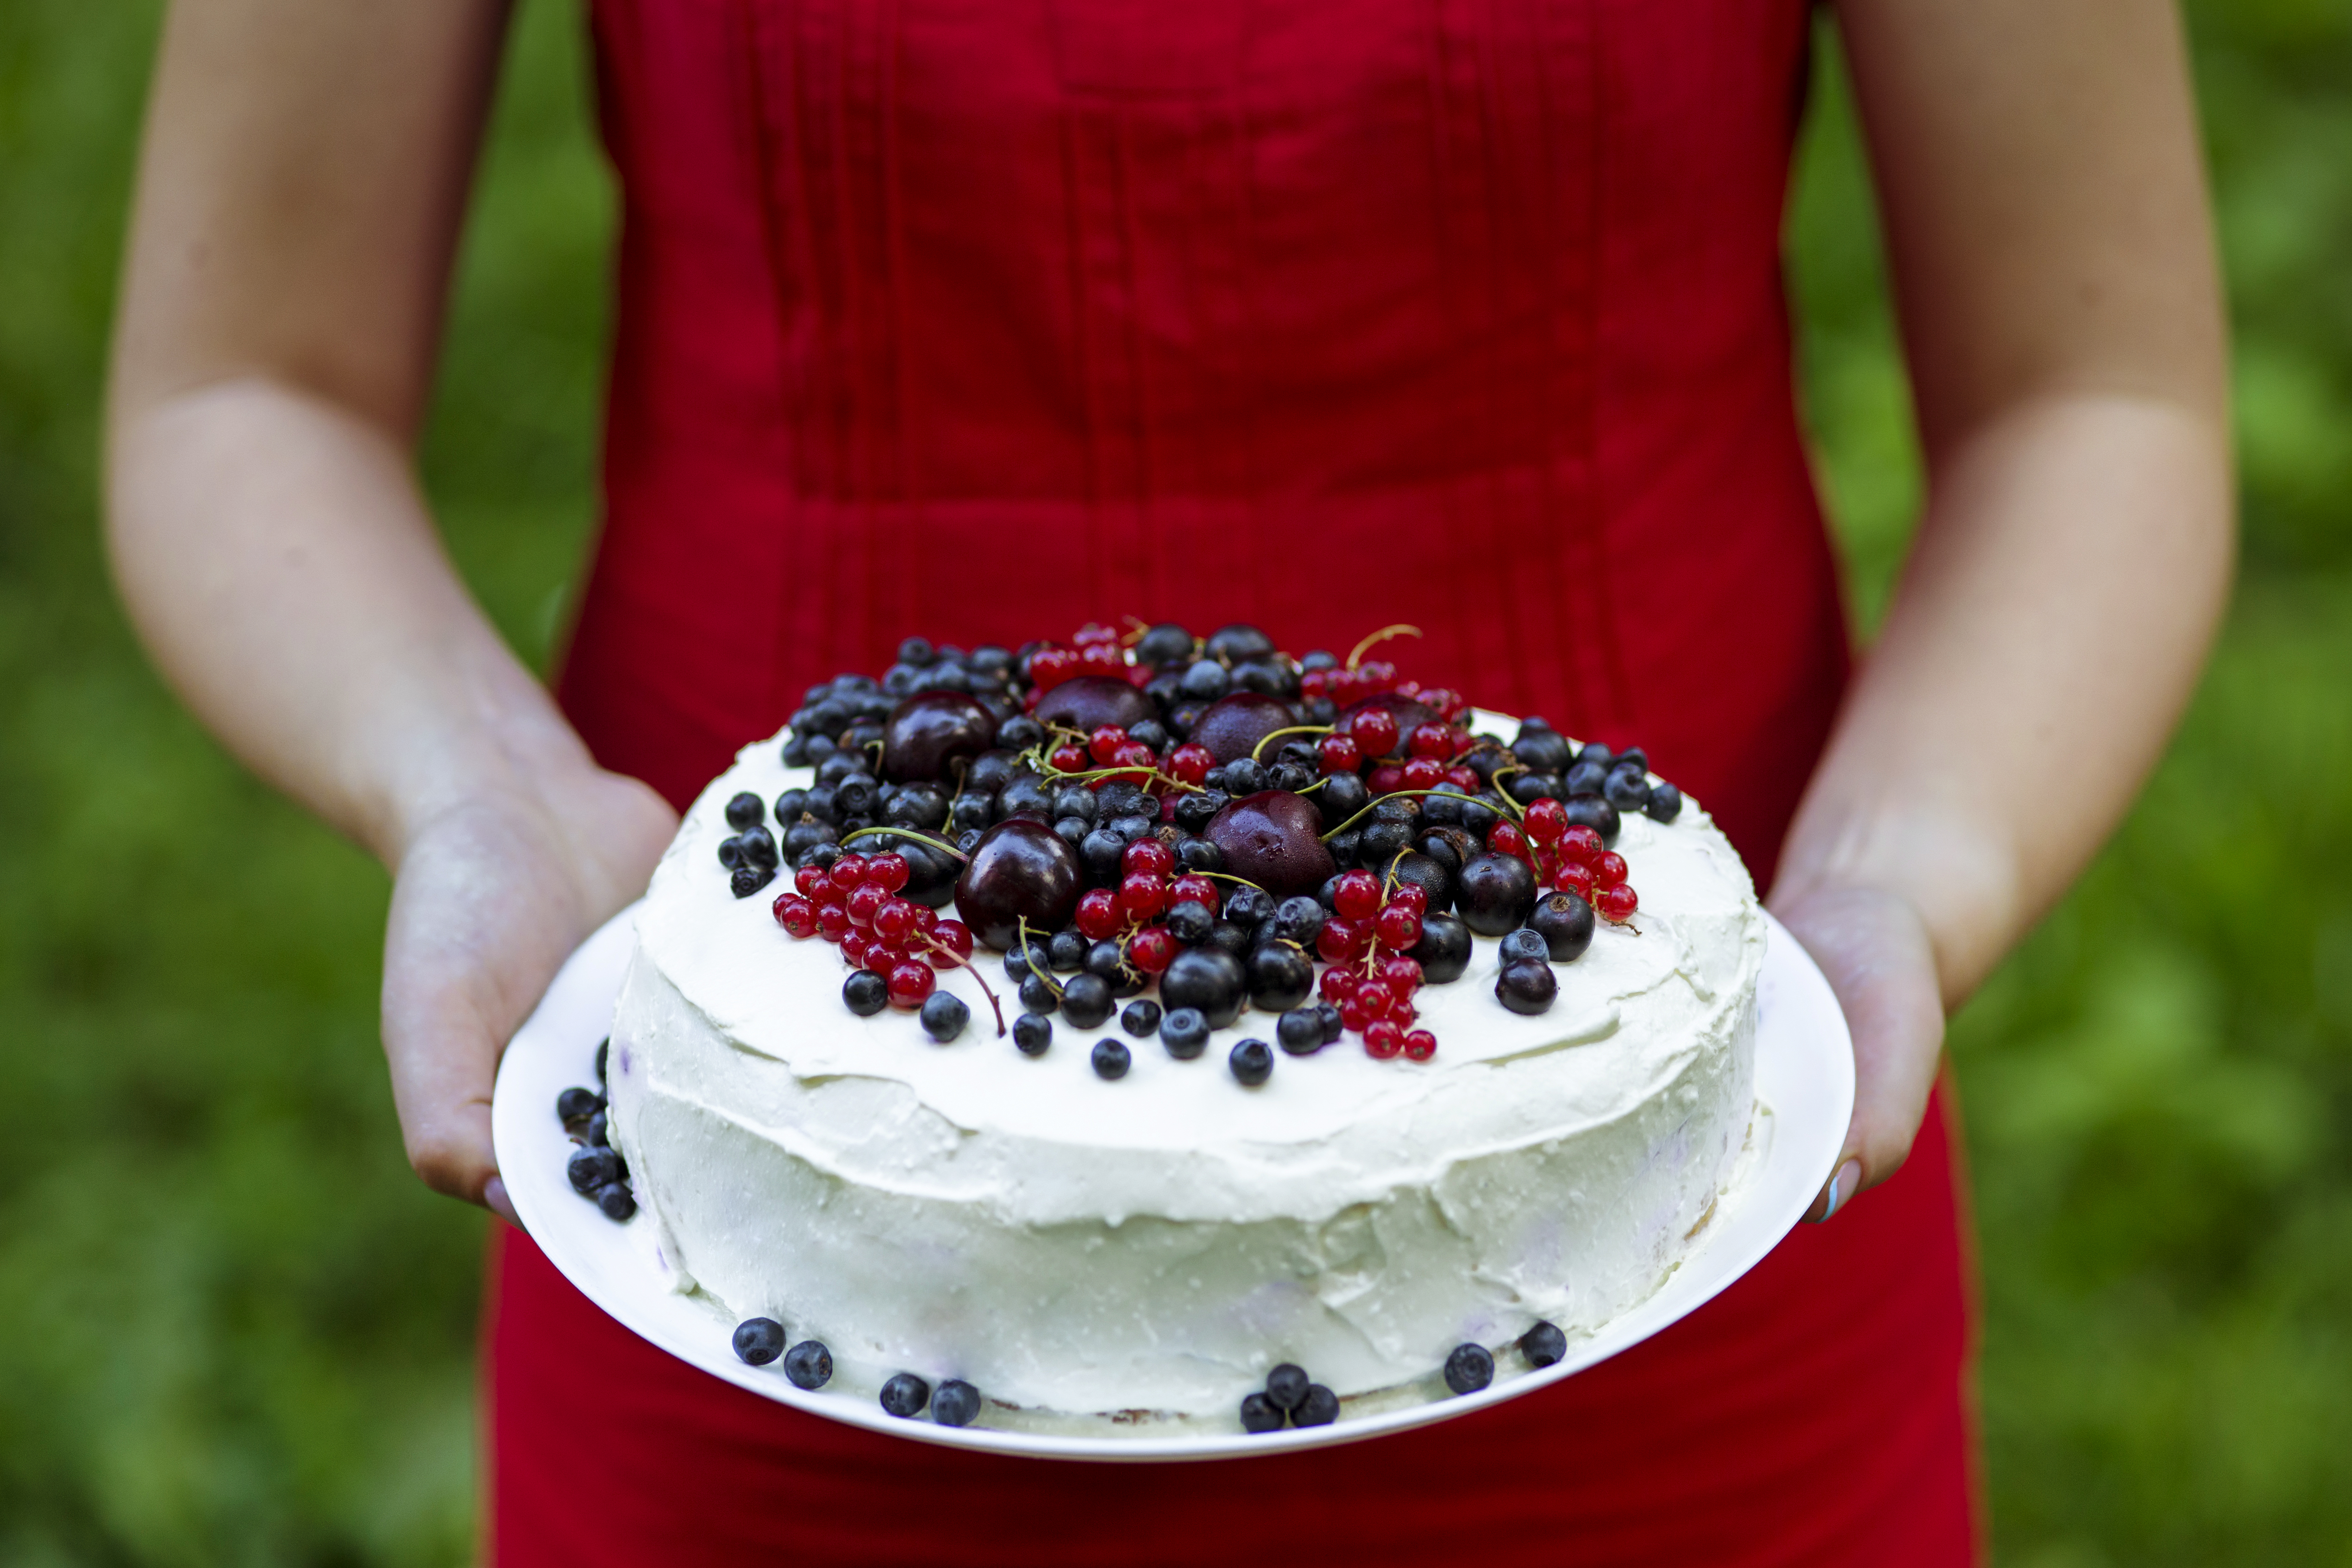 Holding a fresh berry cake photo